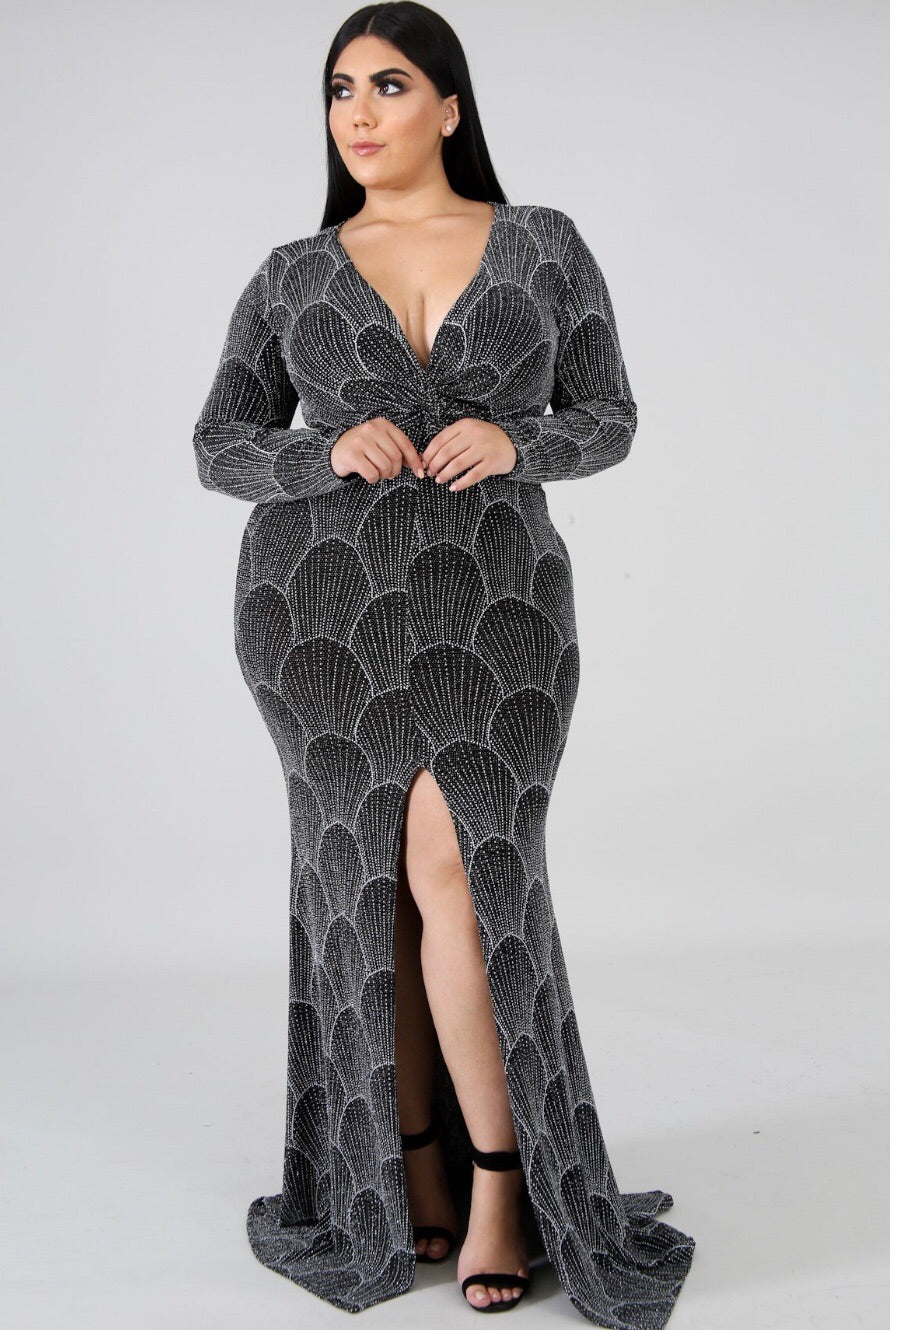 Glitter Long Sleeve Plus Size Dress - Semai House Of fashion